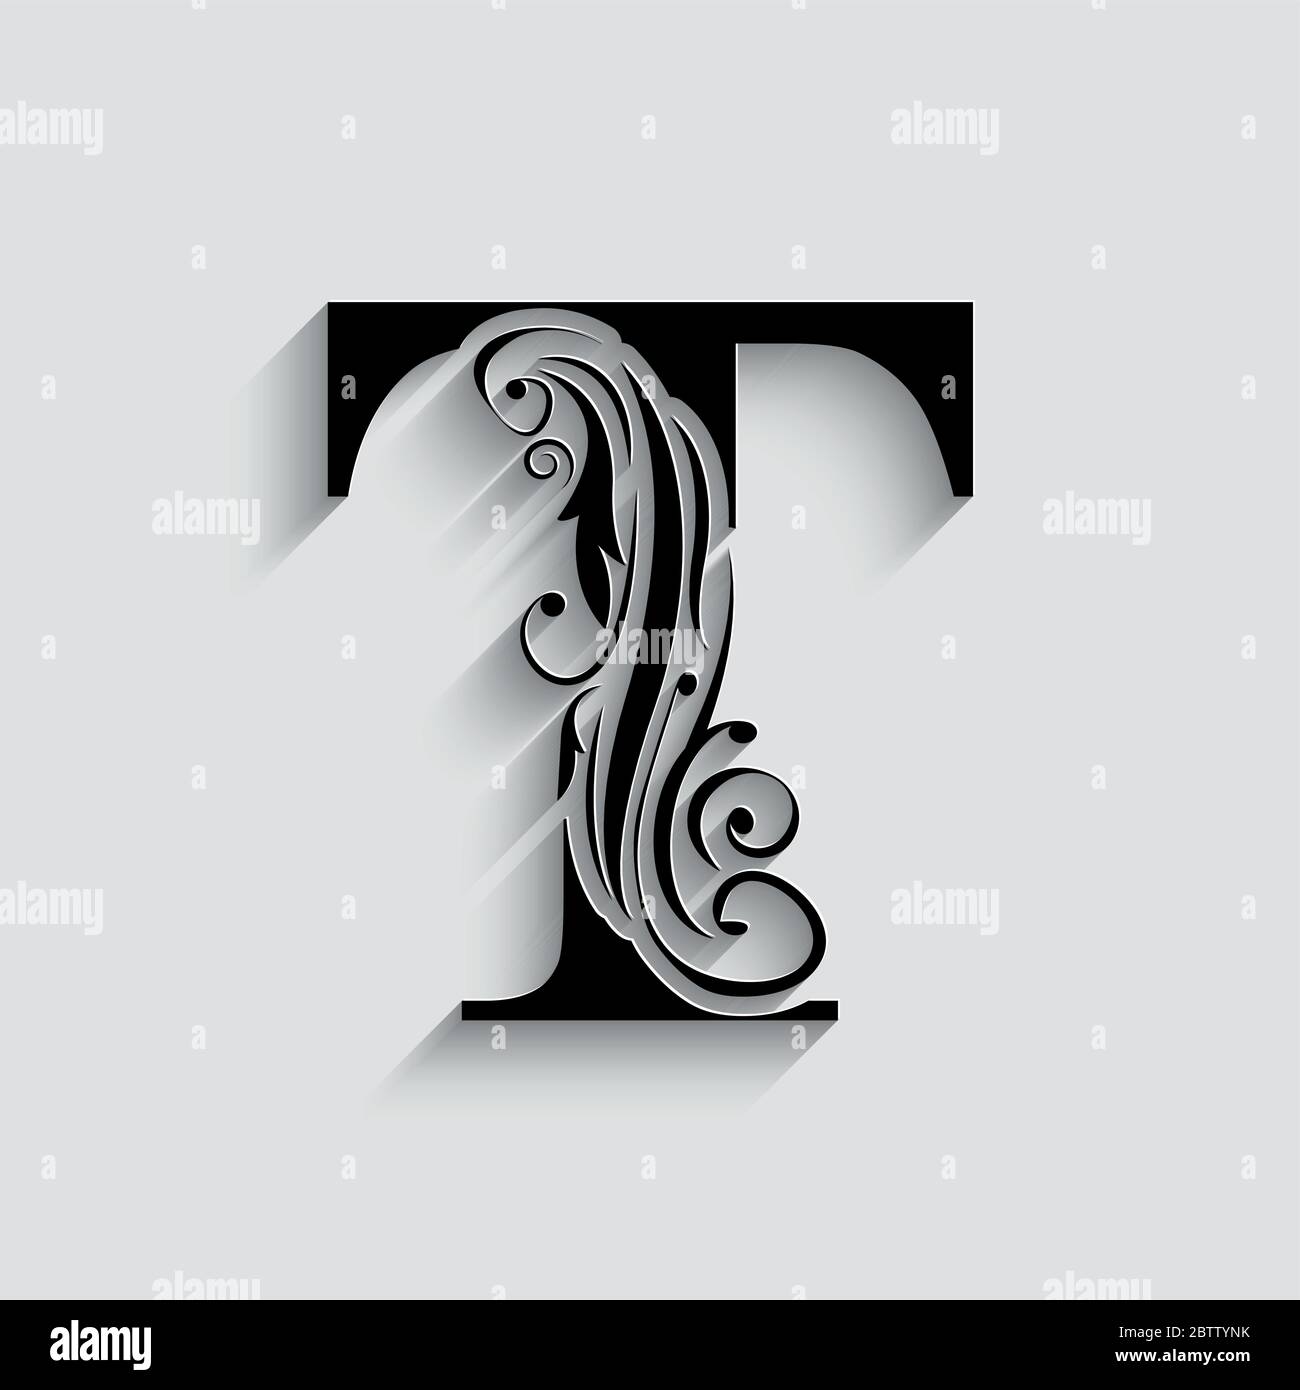 alphabet photography letter t